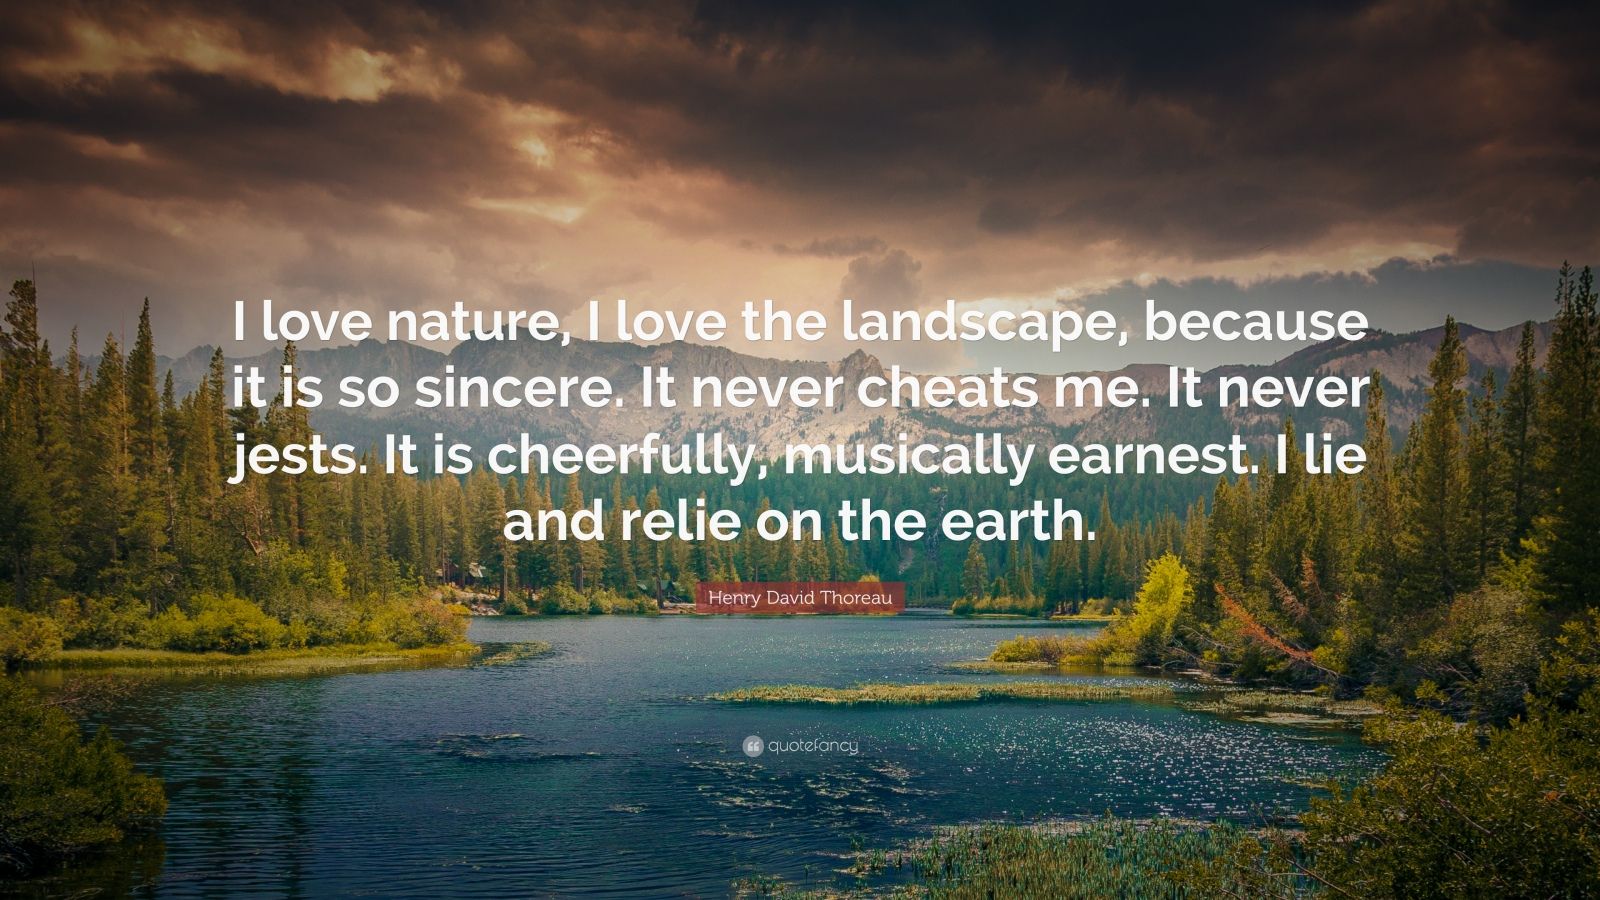 Henry David Thoreau Quote: “I love nature, I love the landscape ...